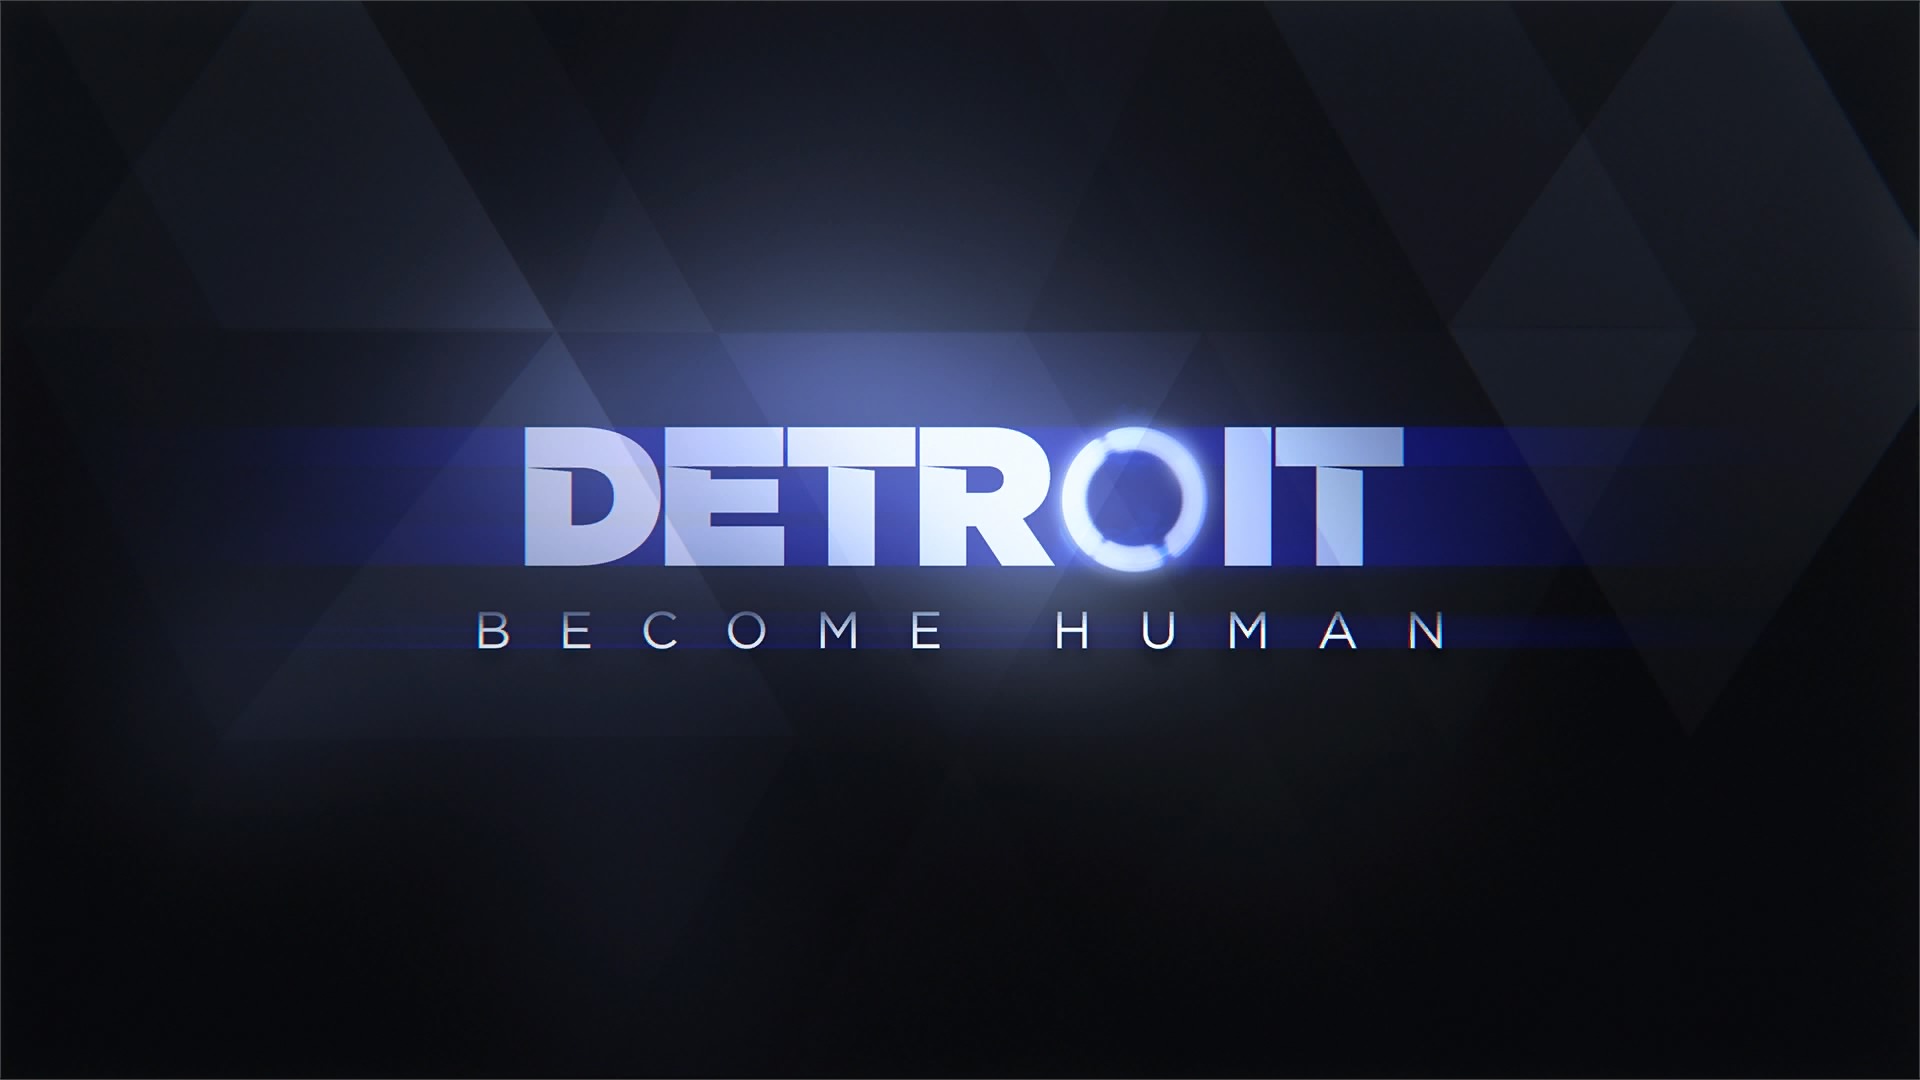 Detroit_ Become Human_20190318161304.jpg